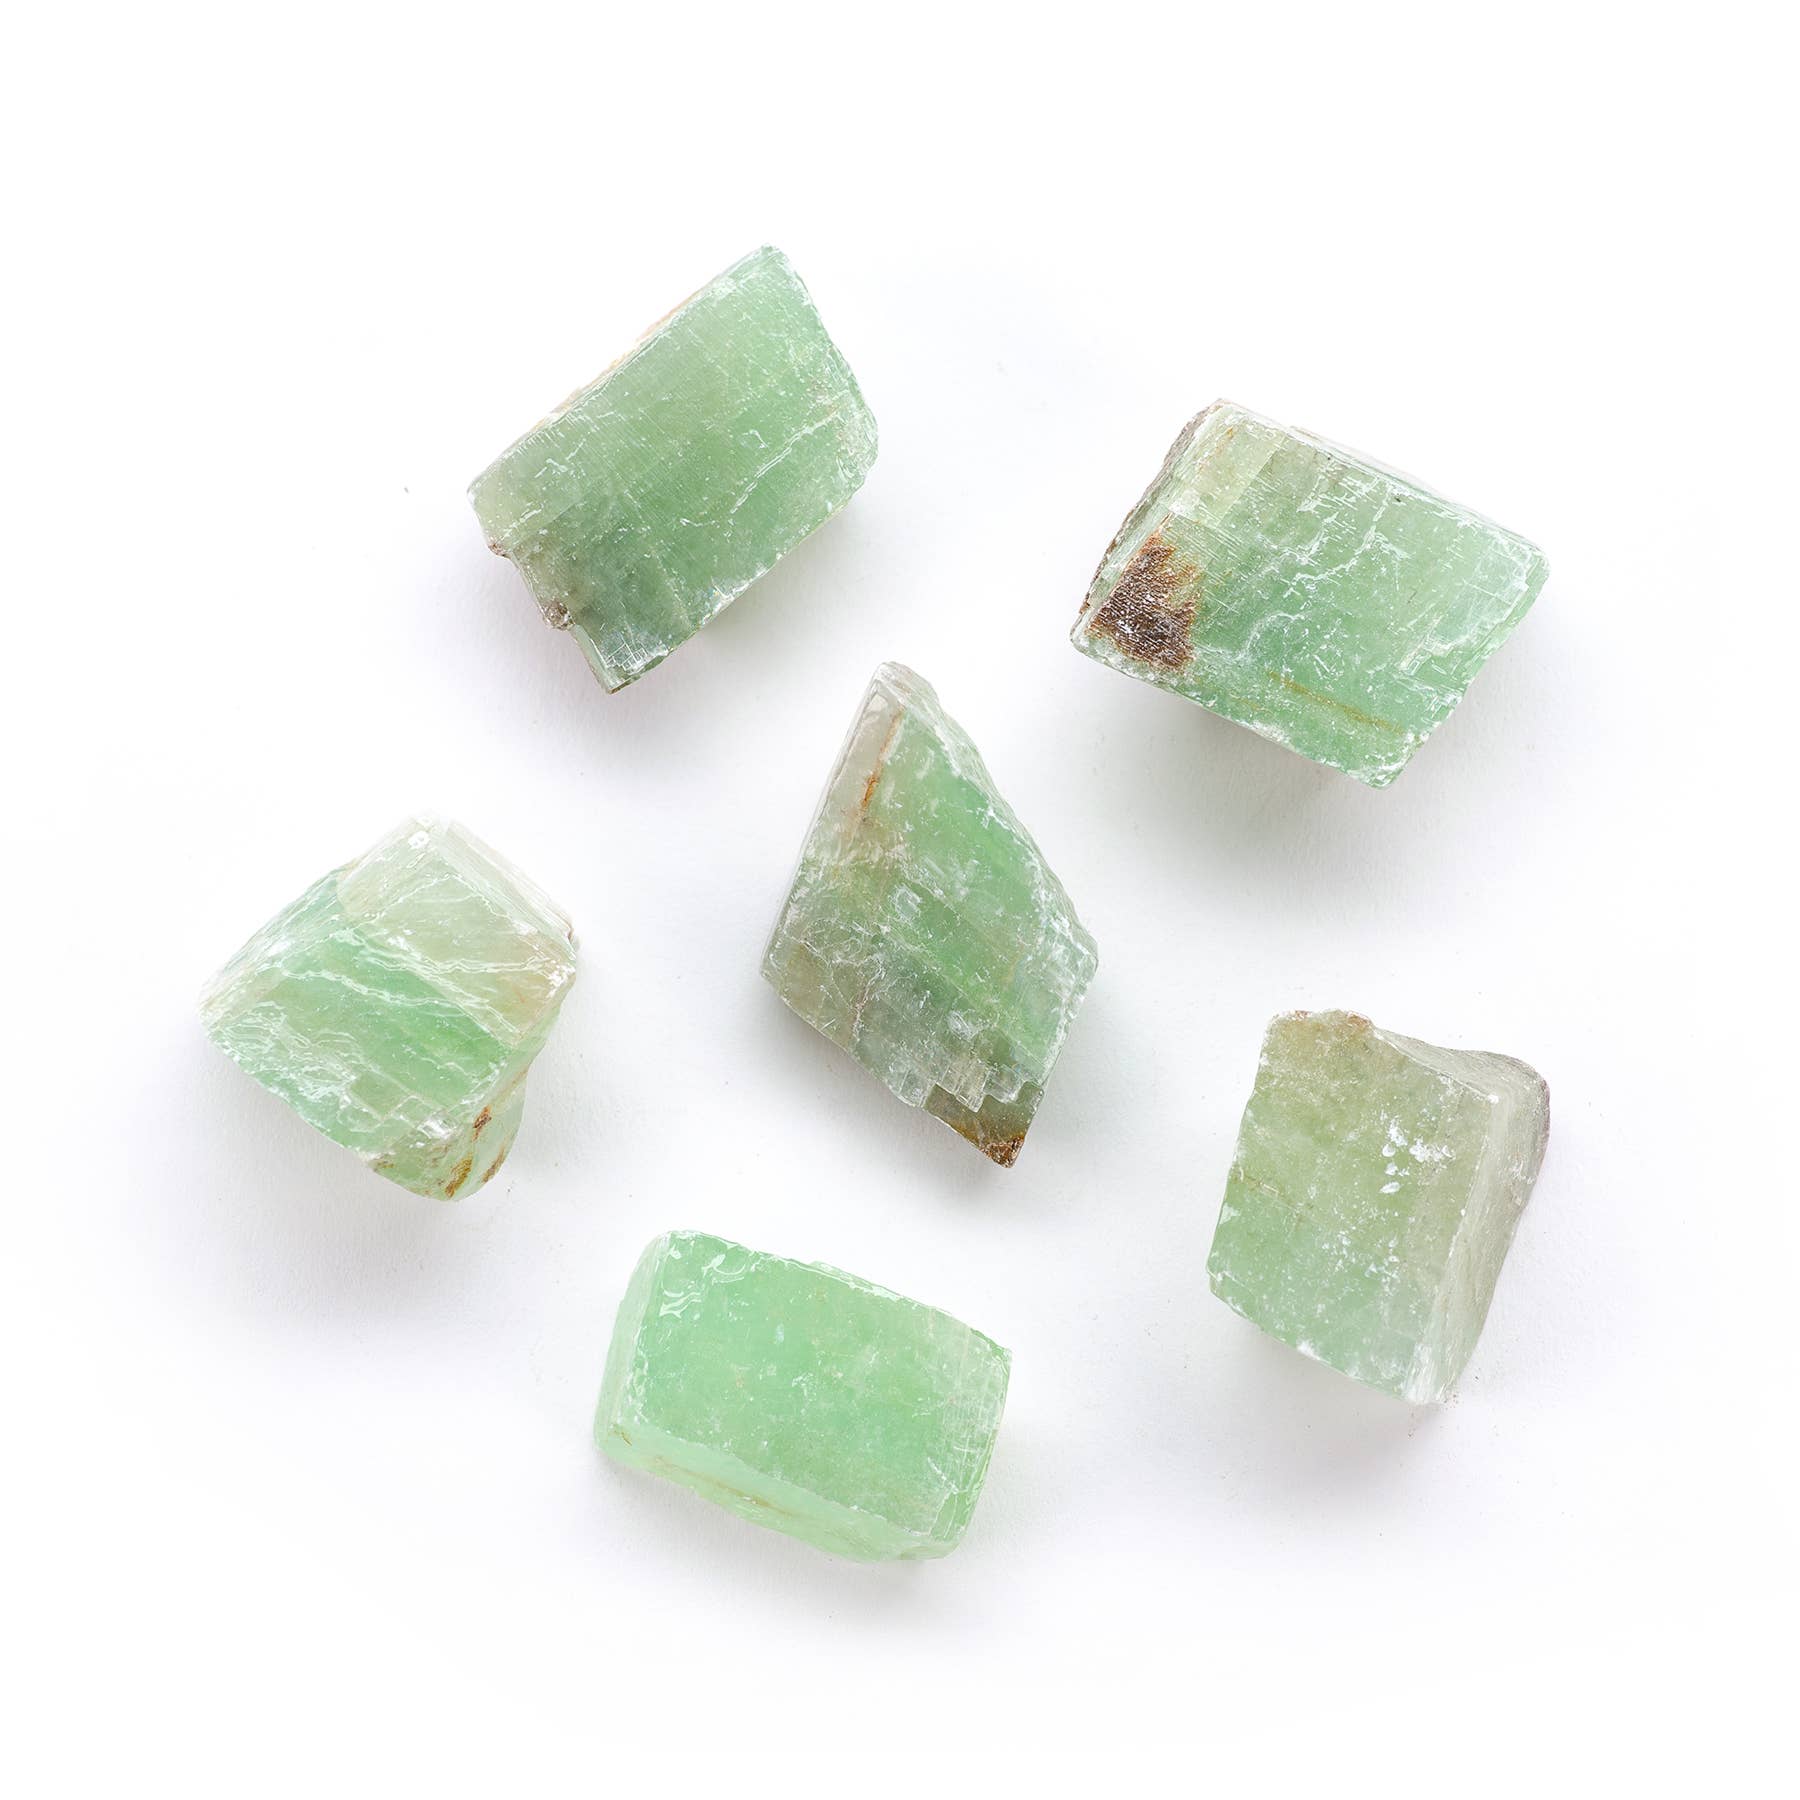 Calcita Verde Mineral A Granel. 